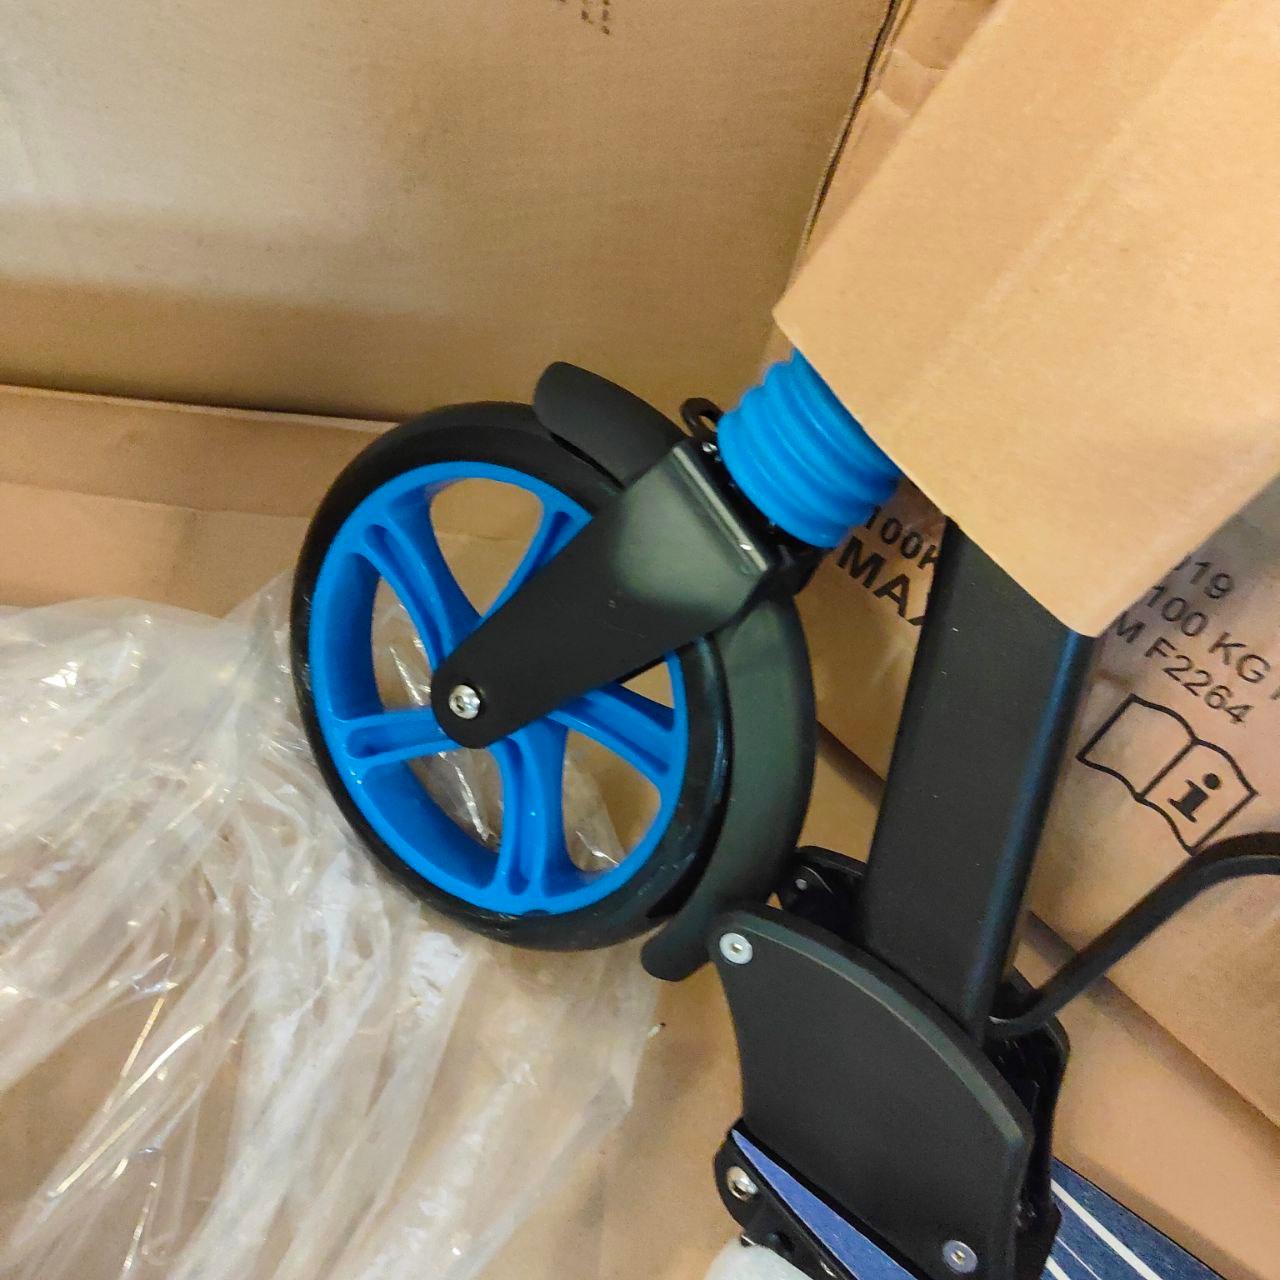 Folding 2 Wheel Scooter for Adults Teens, 200mm Big Wheels Blue - Massive Discounts